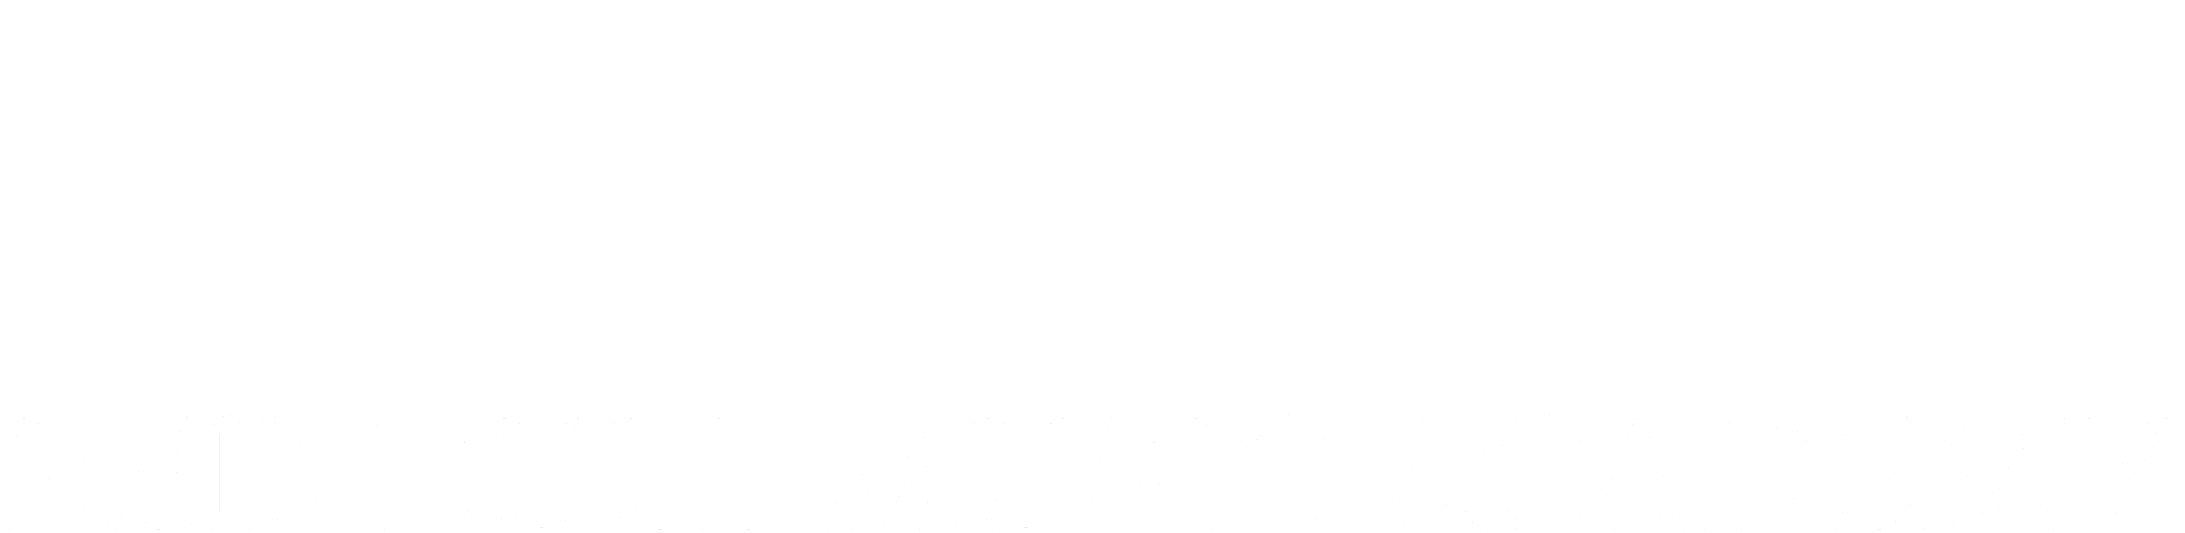 Red Bull Music Academy Logo Black And White - Toronto Film Festival Logo White (2400x2400), Png Download